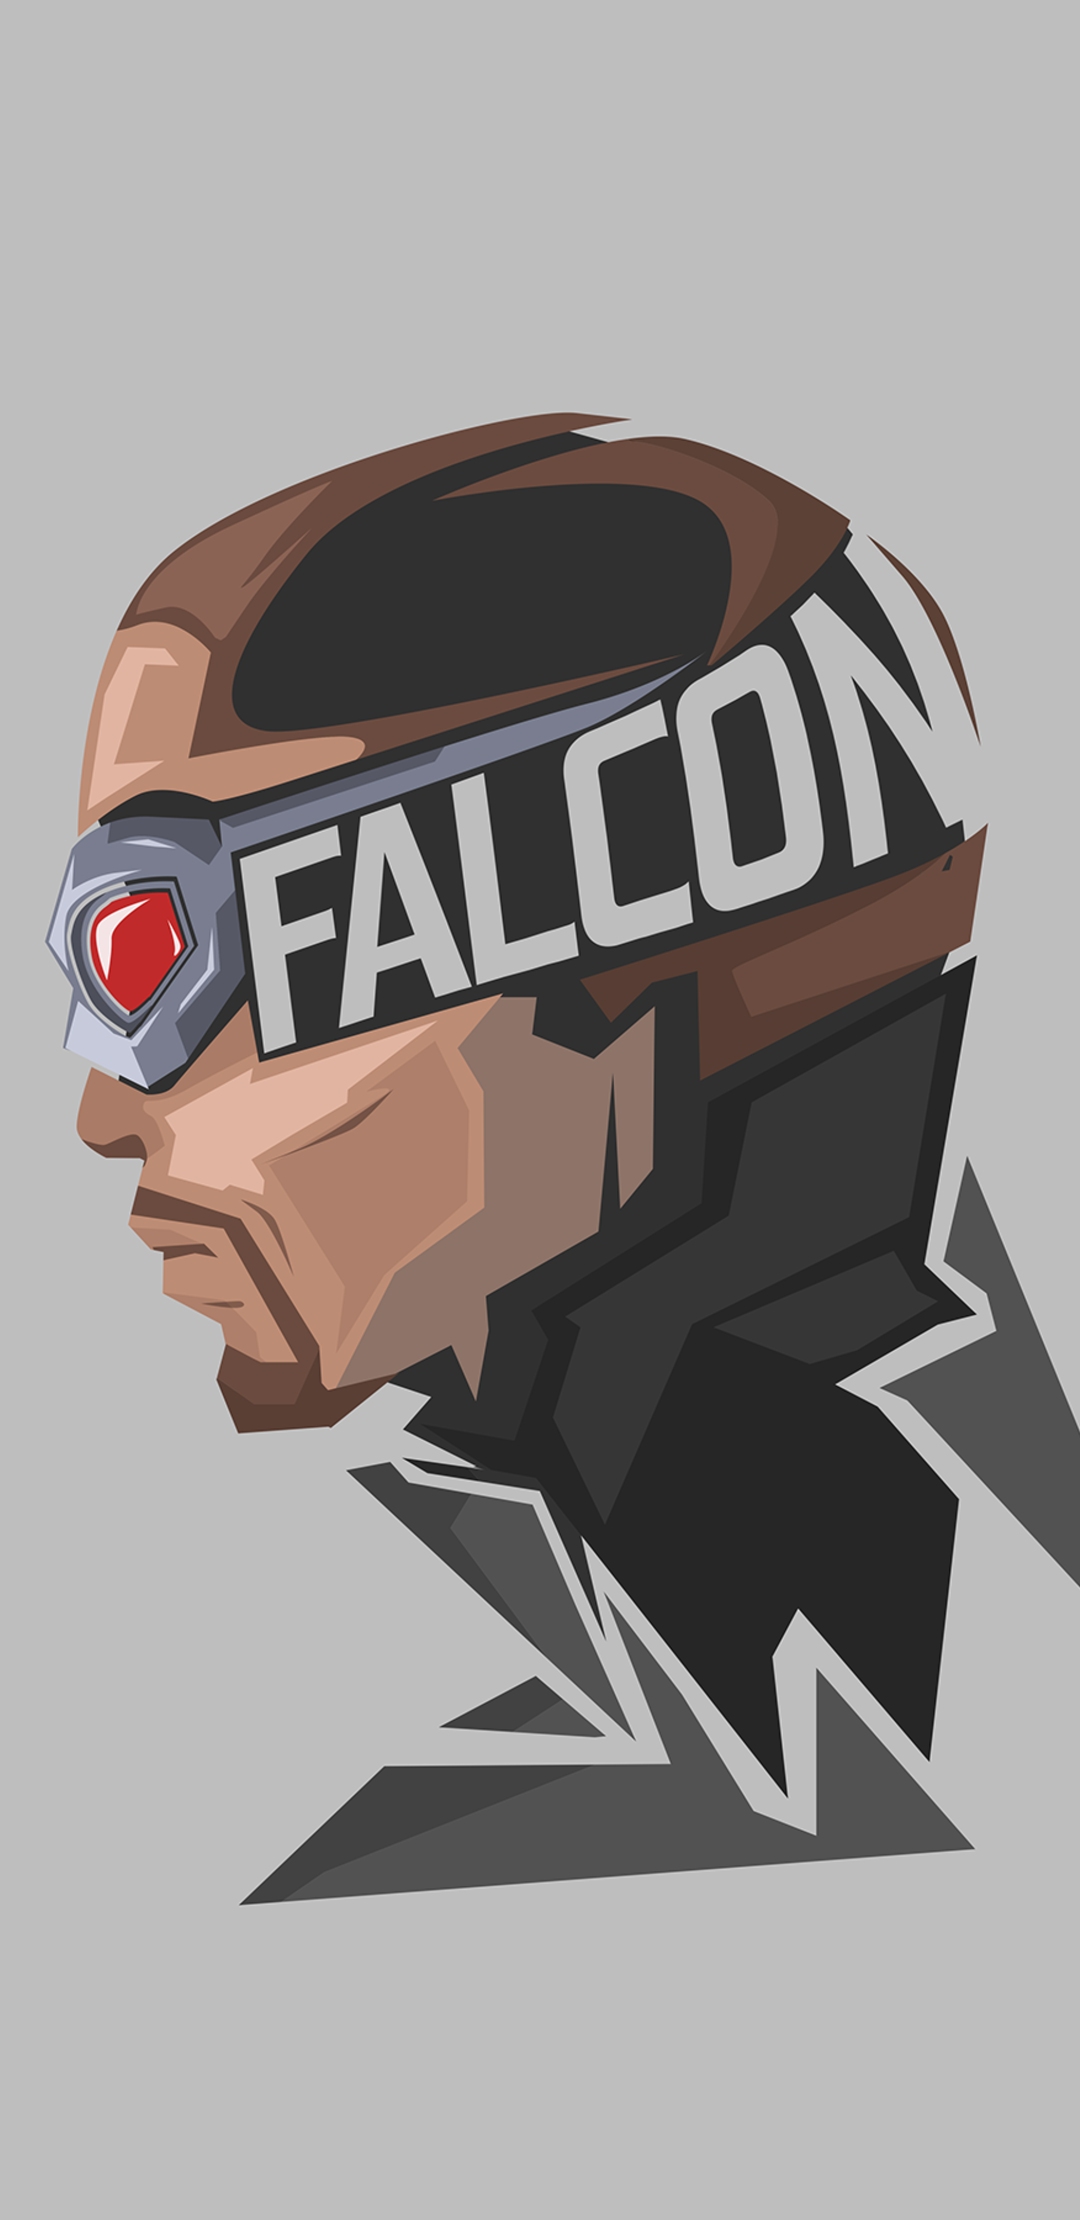 Falcon Phone Wallpaper by BossLogic